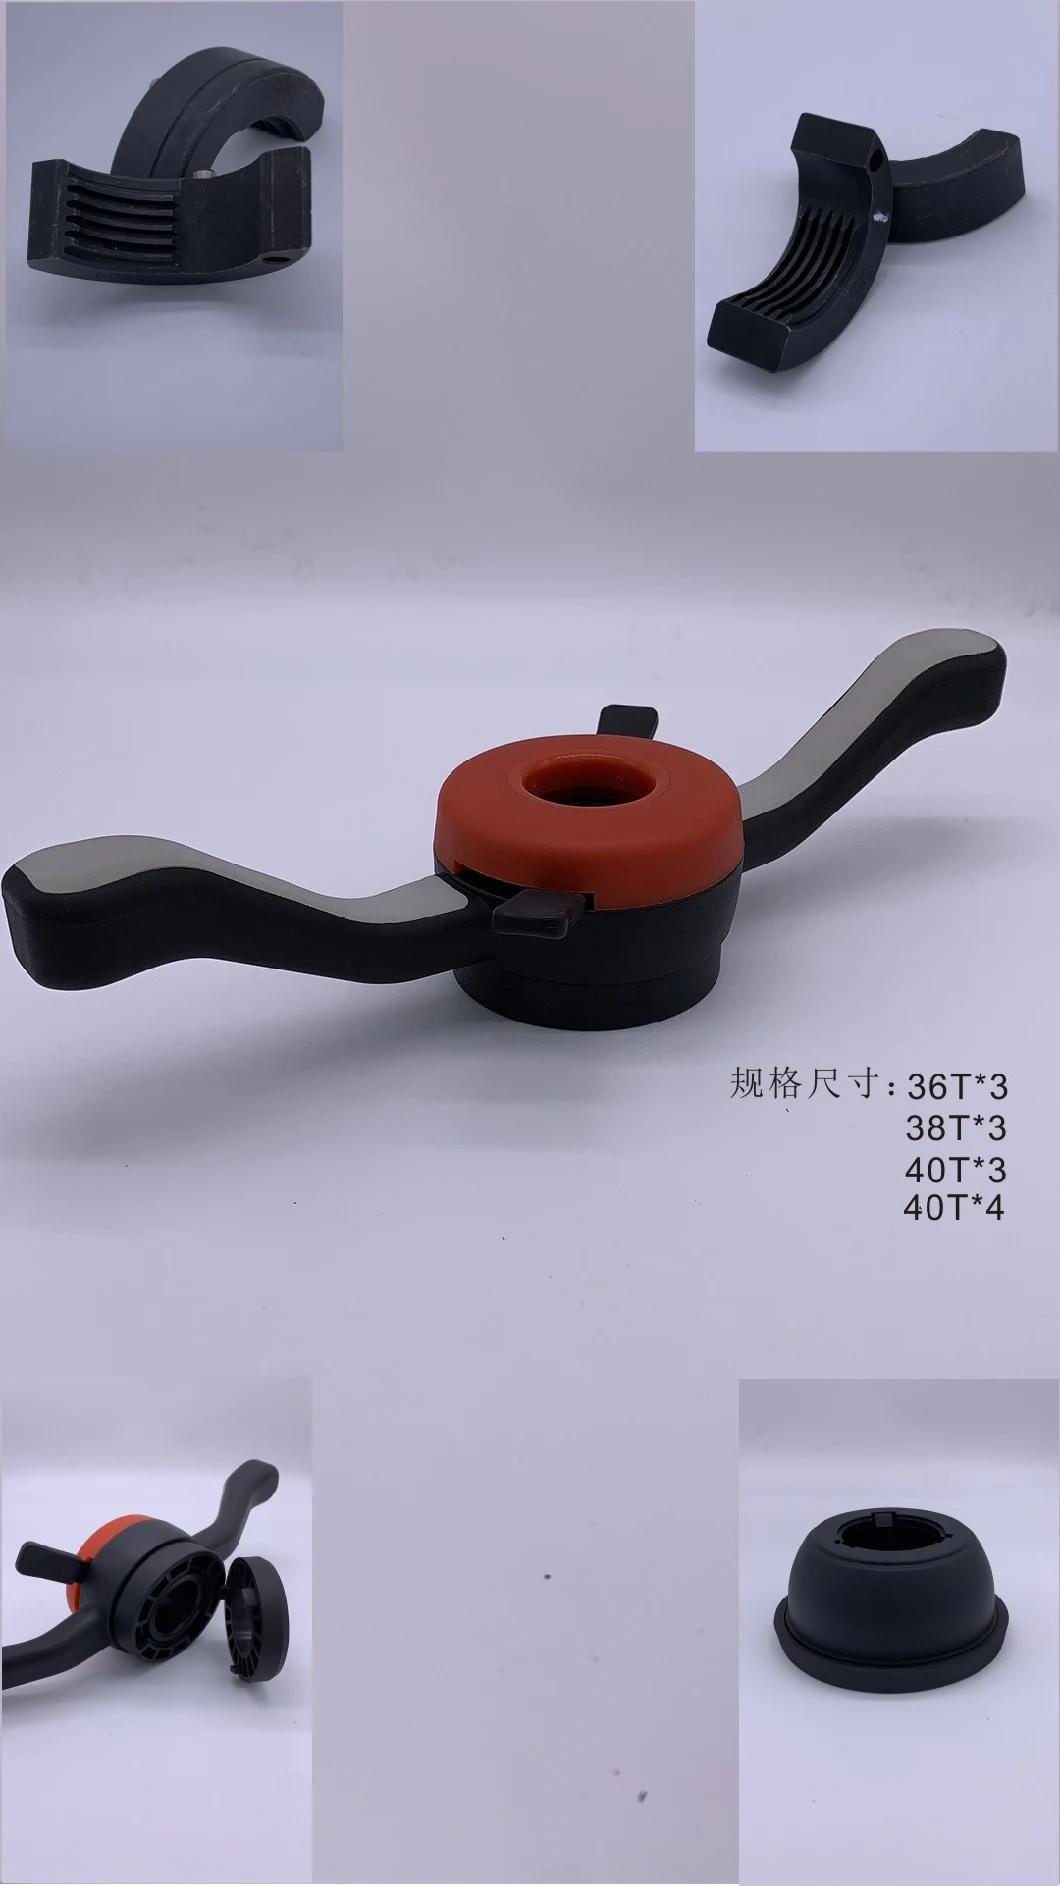 Wheel Balancer Tire Change Tool, Qiuck Release Wing Nut & Pressure Cup Hub Shaft Nut 40mm/38mm/36mm Wheel Balancer (Thread Diameter 40mm, Pitch 3mm)